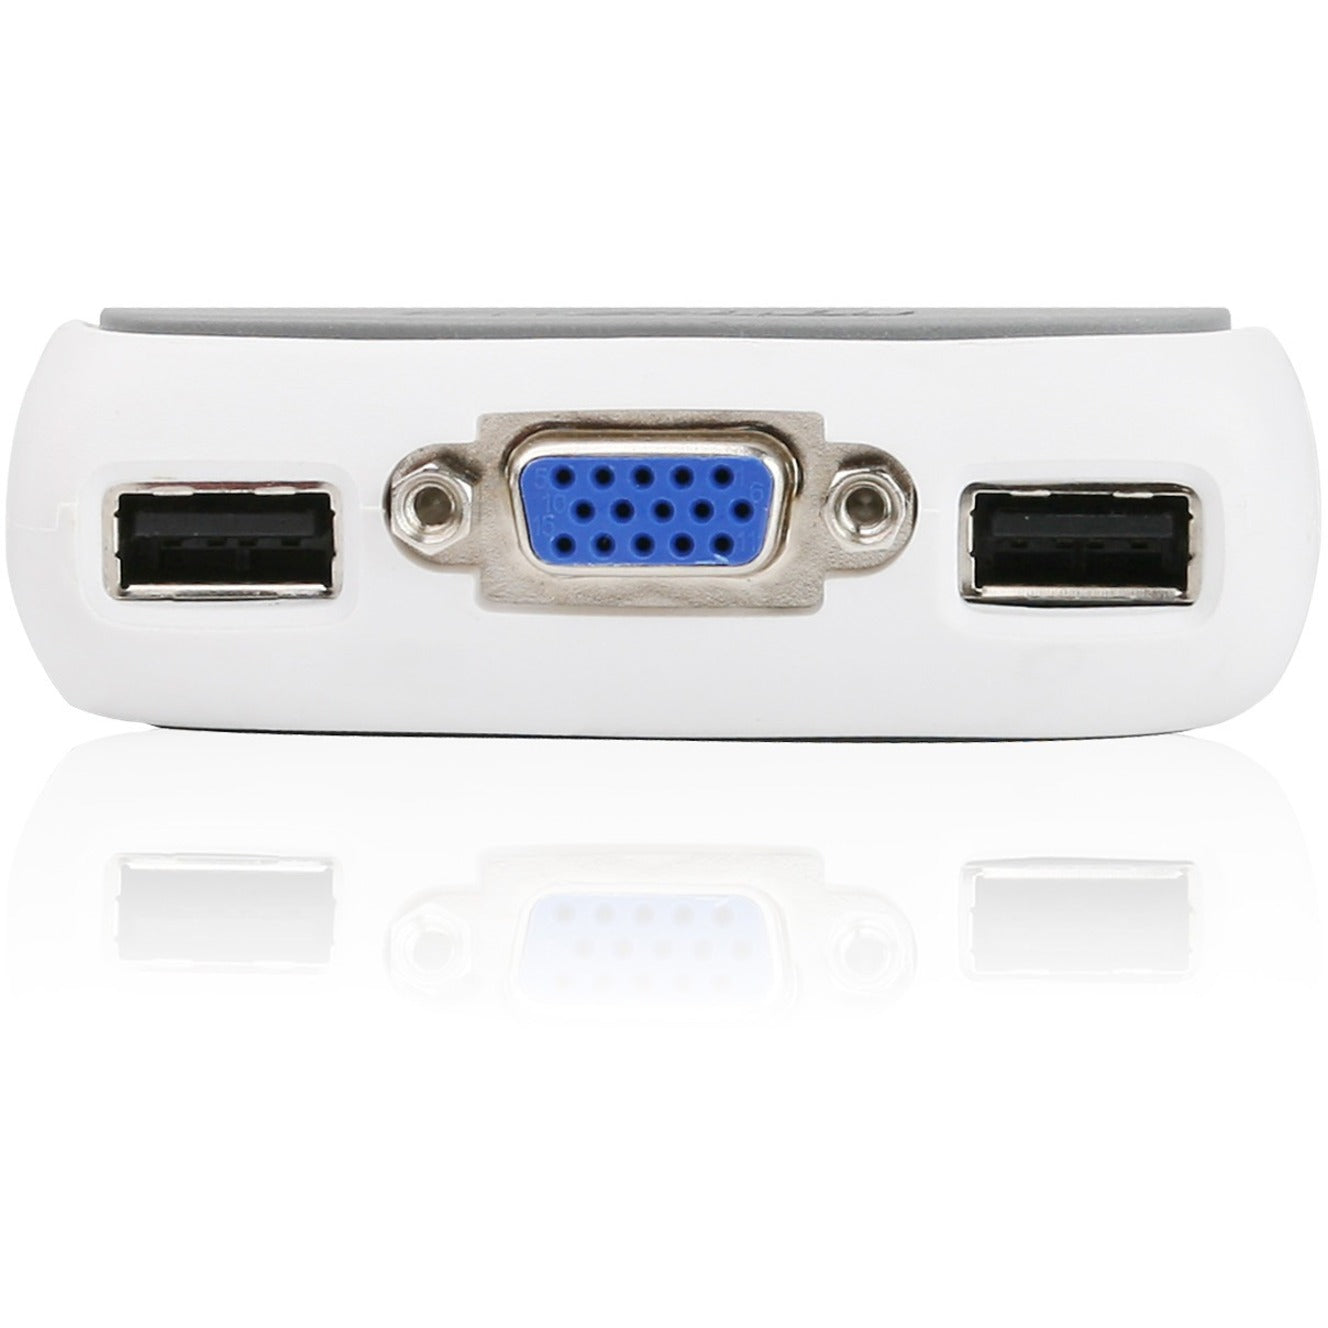 IOGEAR GCS632UW6 MiniView Micro USB PLUS 2 Port KVM Switch, 2048 x 1536 Video Resolution, 3 Year Warranty, USB 2.0